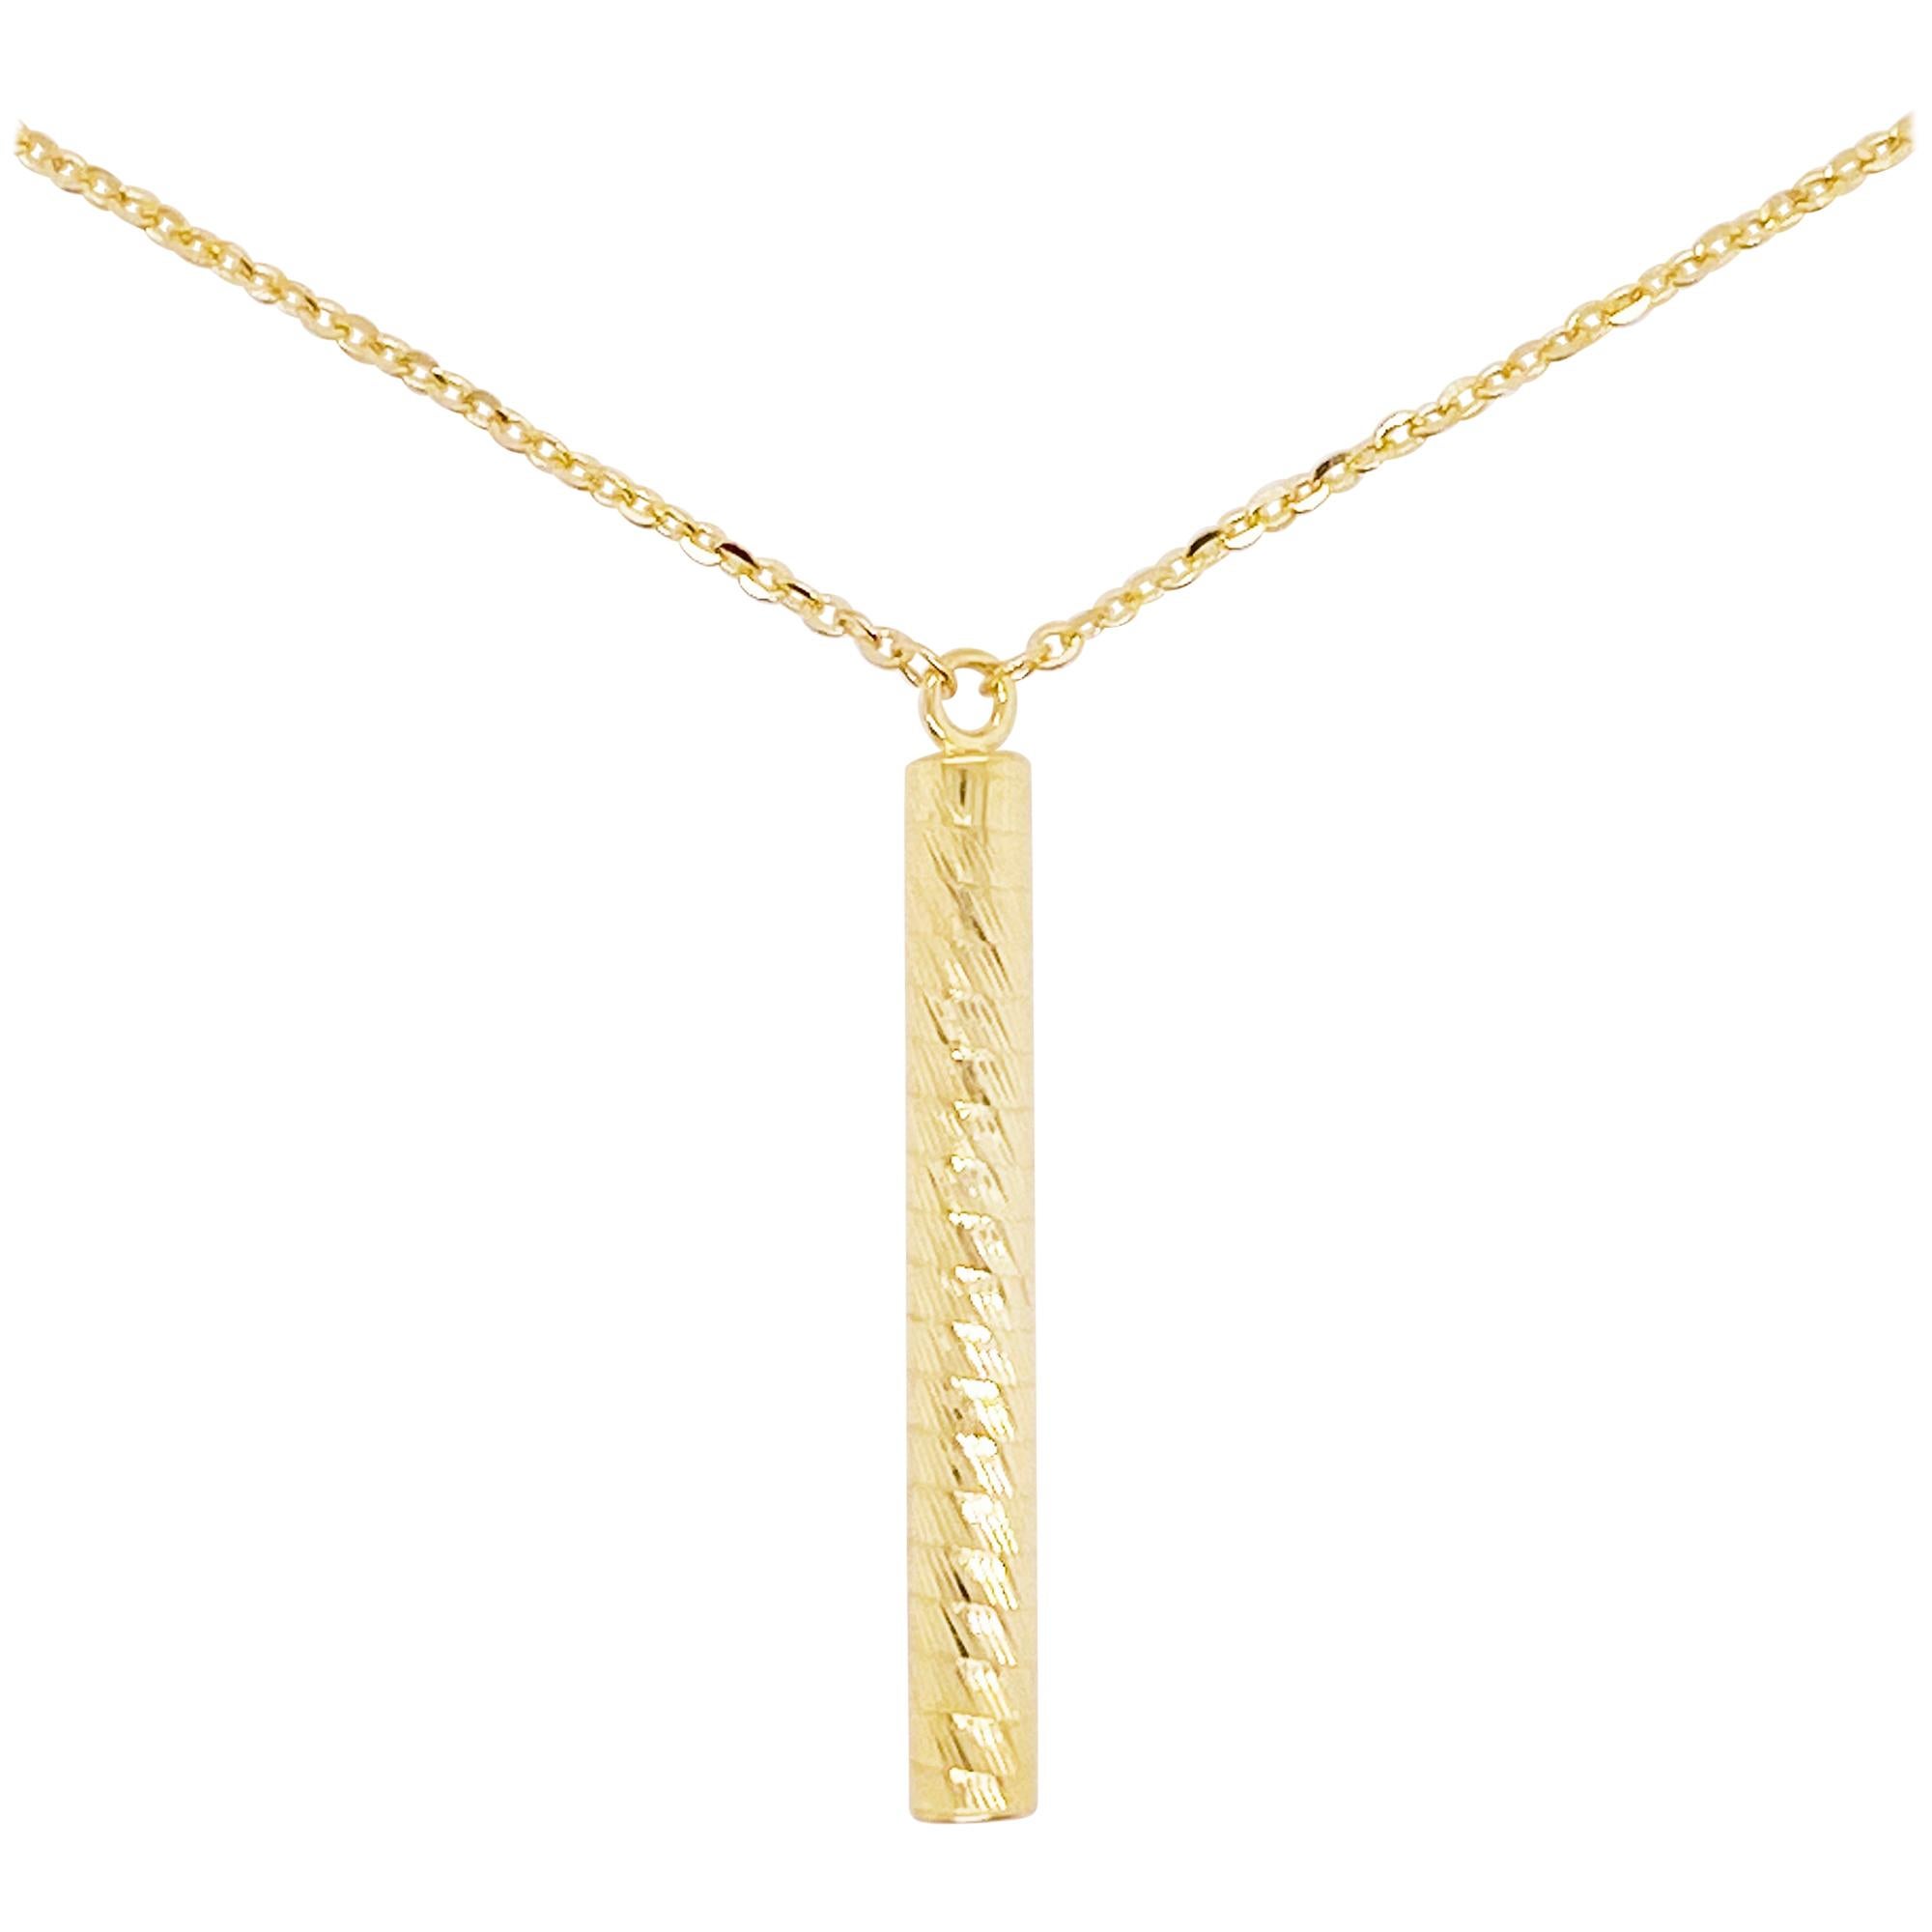 Multi Gemstone Station Necklace in 14 Karat Yellow Gold - Sam's Club